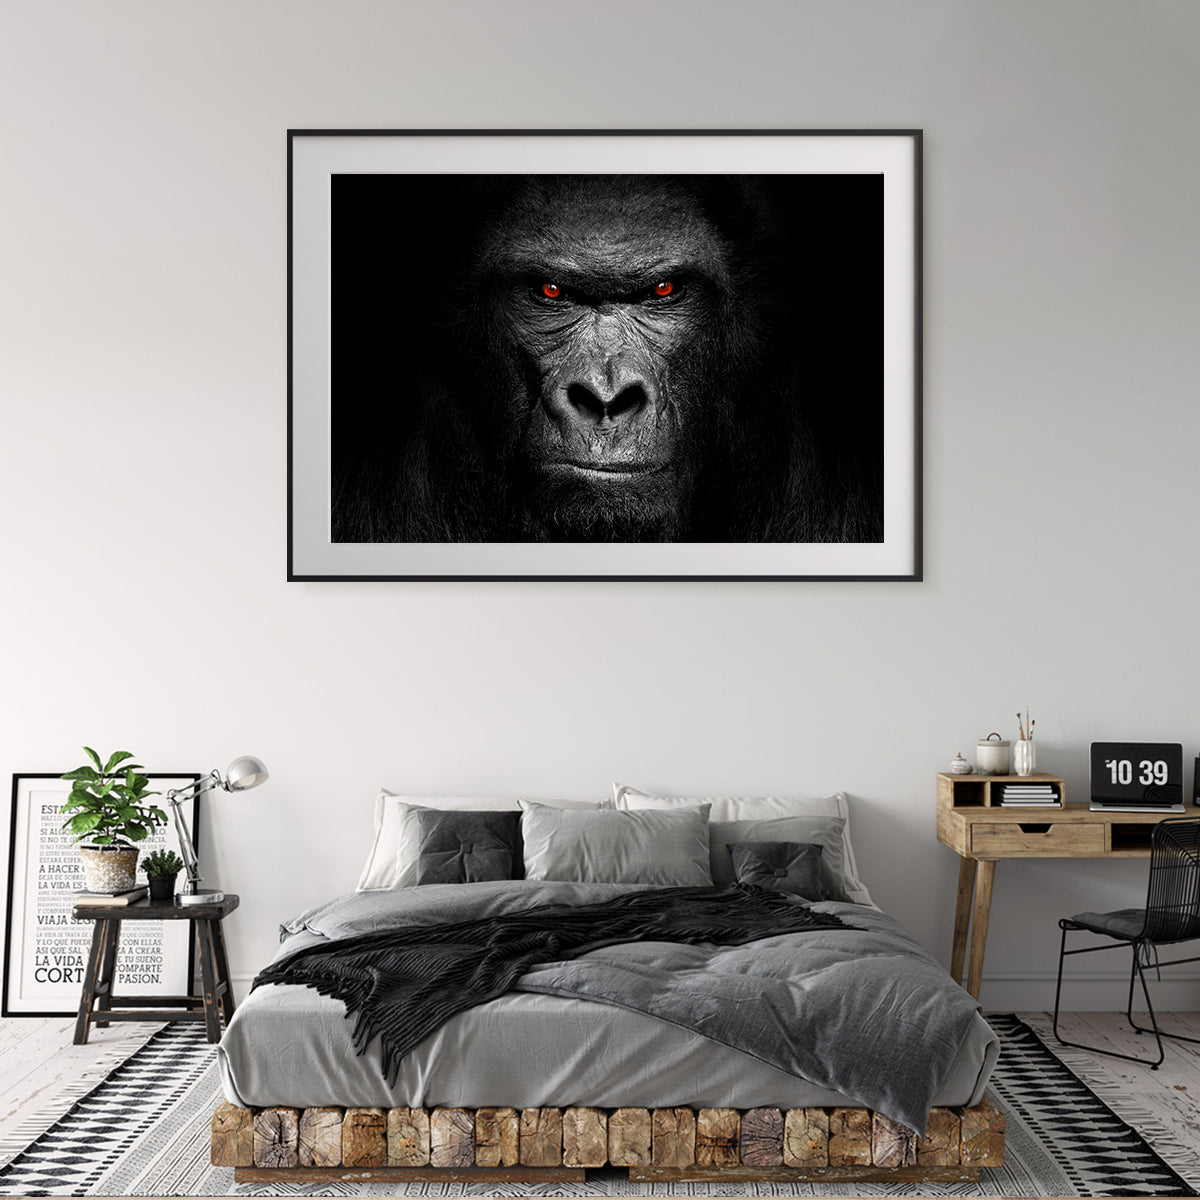 Gorilla Black White Portrait Poster For Home Decor-Horizontal Posters NOT FRAMED-CetArt-10″x8″ inches-CetArt